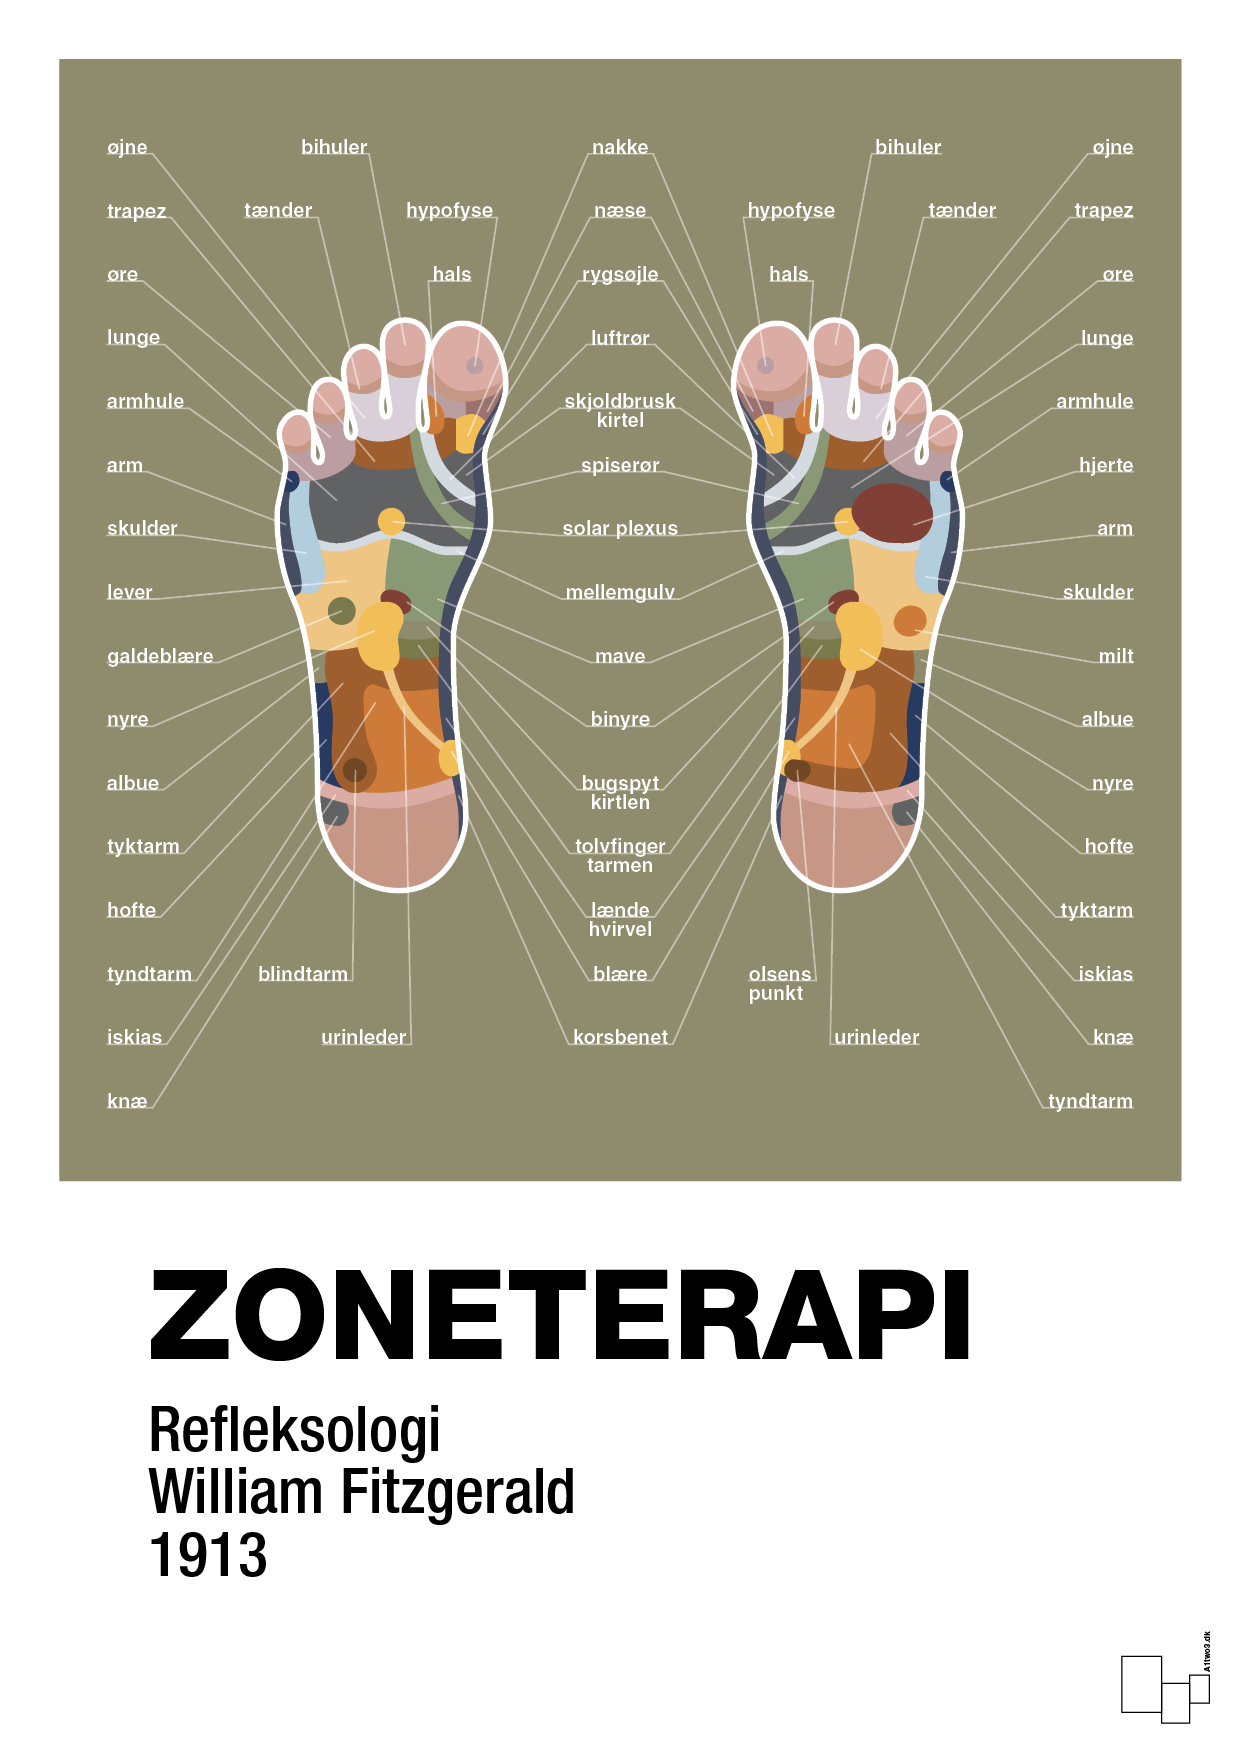 zoneterapi - Plakat med Videnskab i Misty Forrest